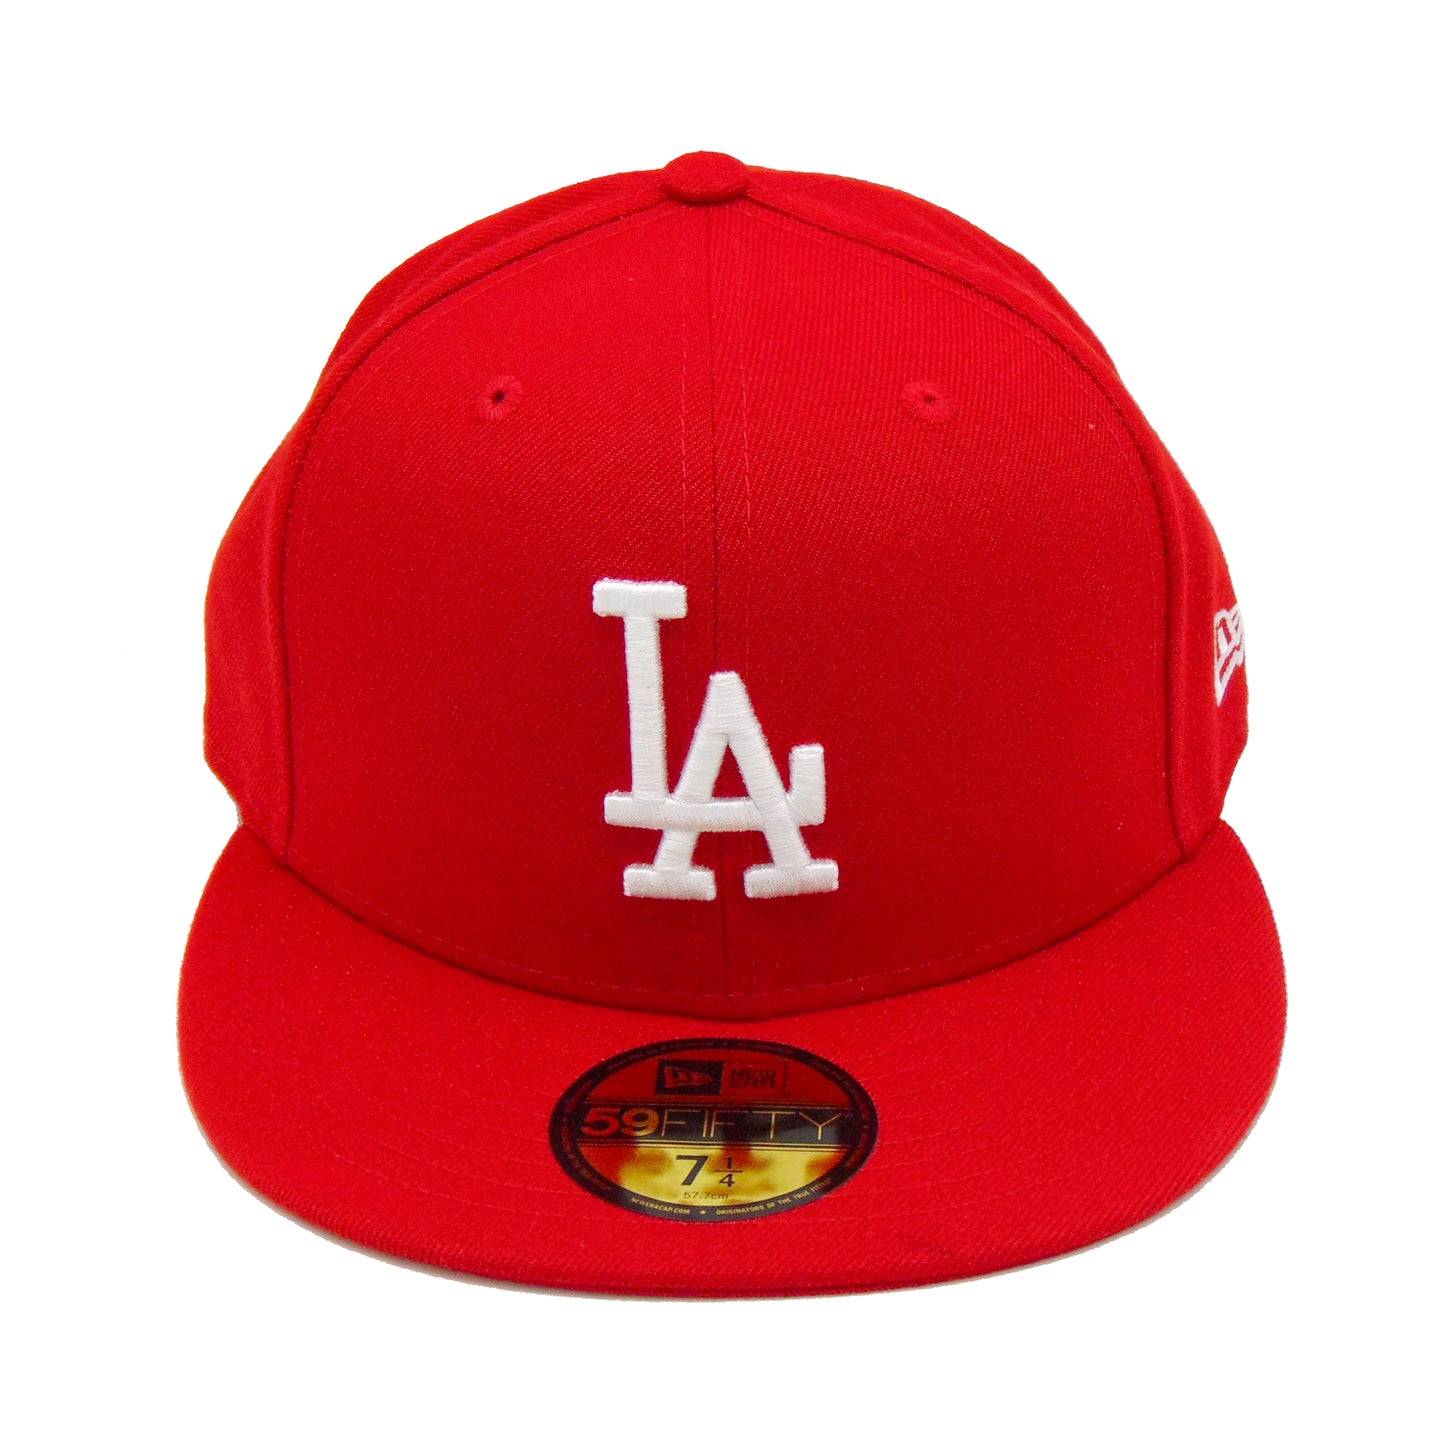 Los Angeles Dodgers Basic New Era Cap Red White